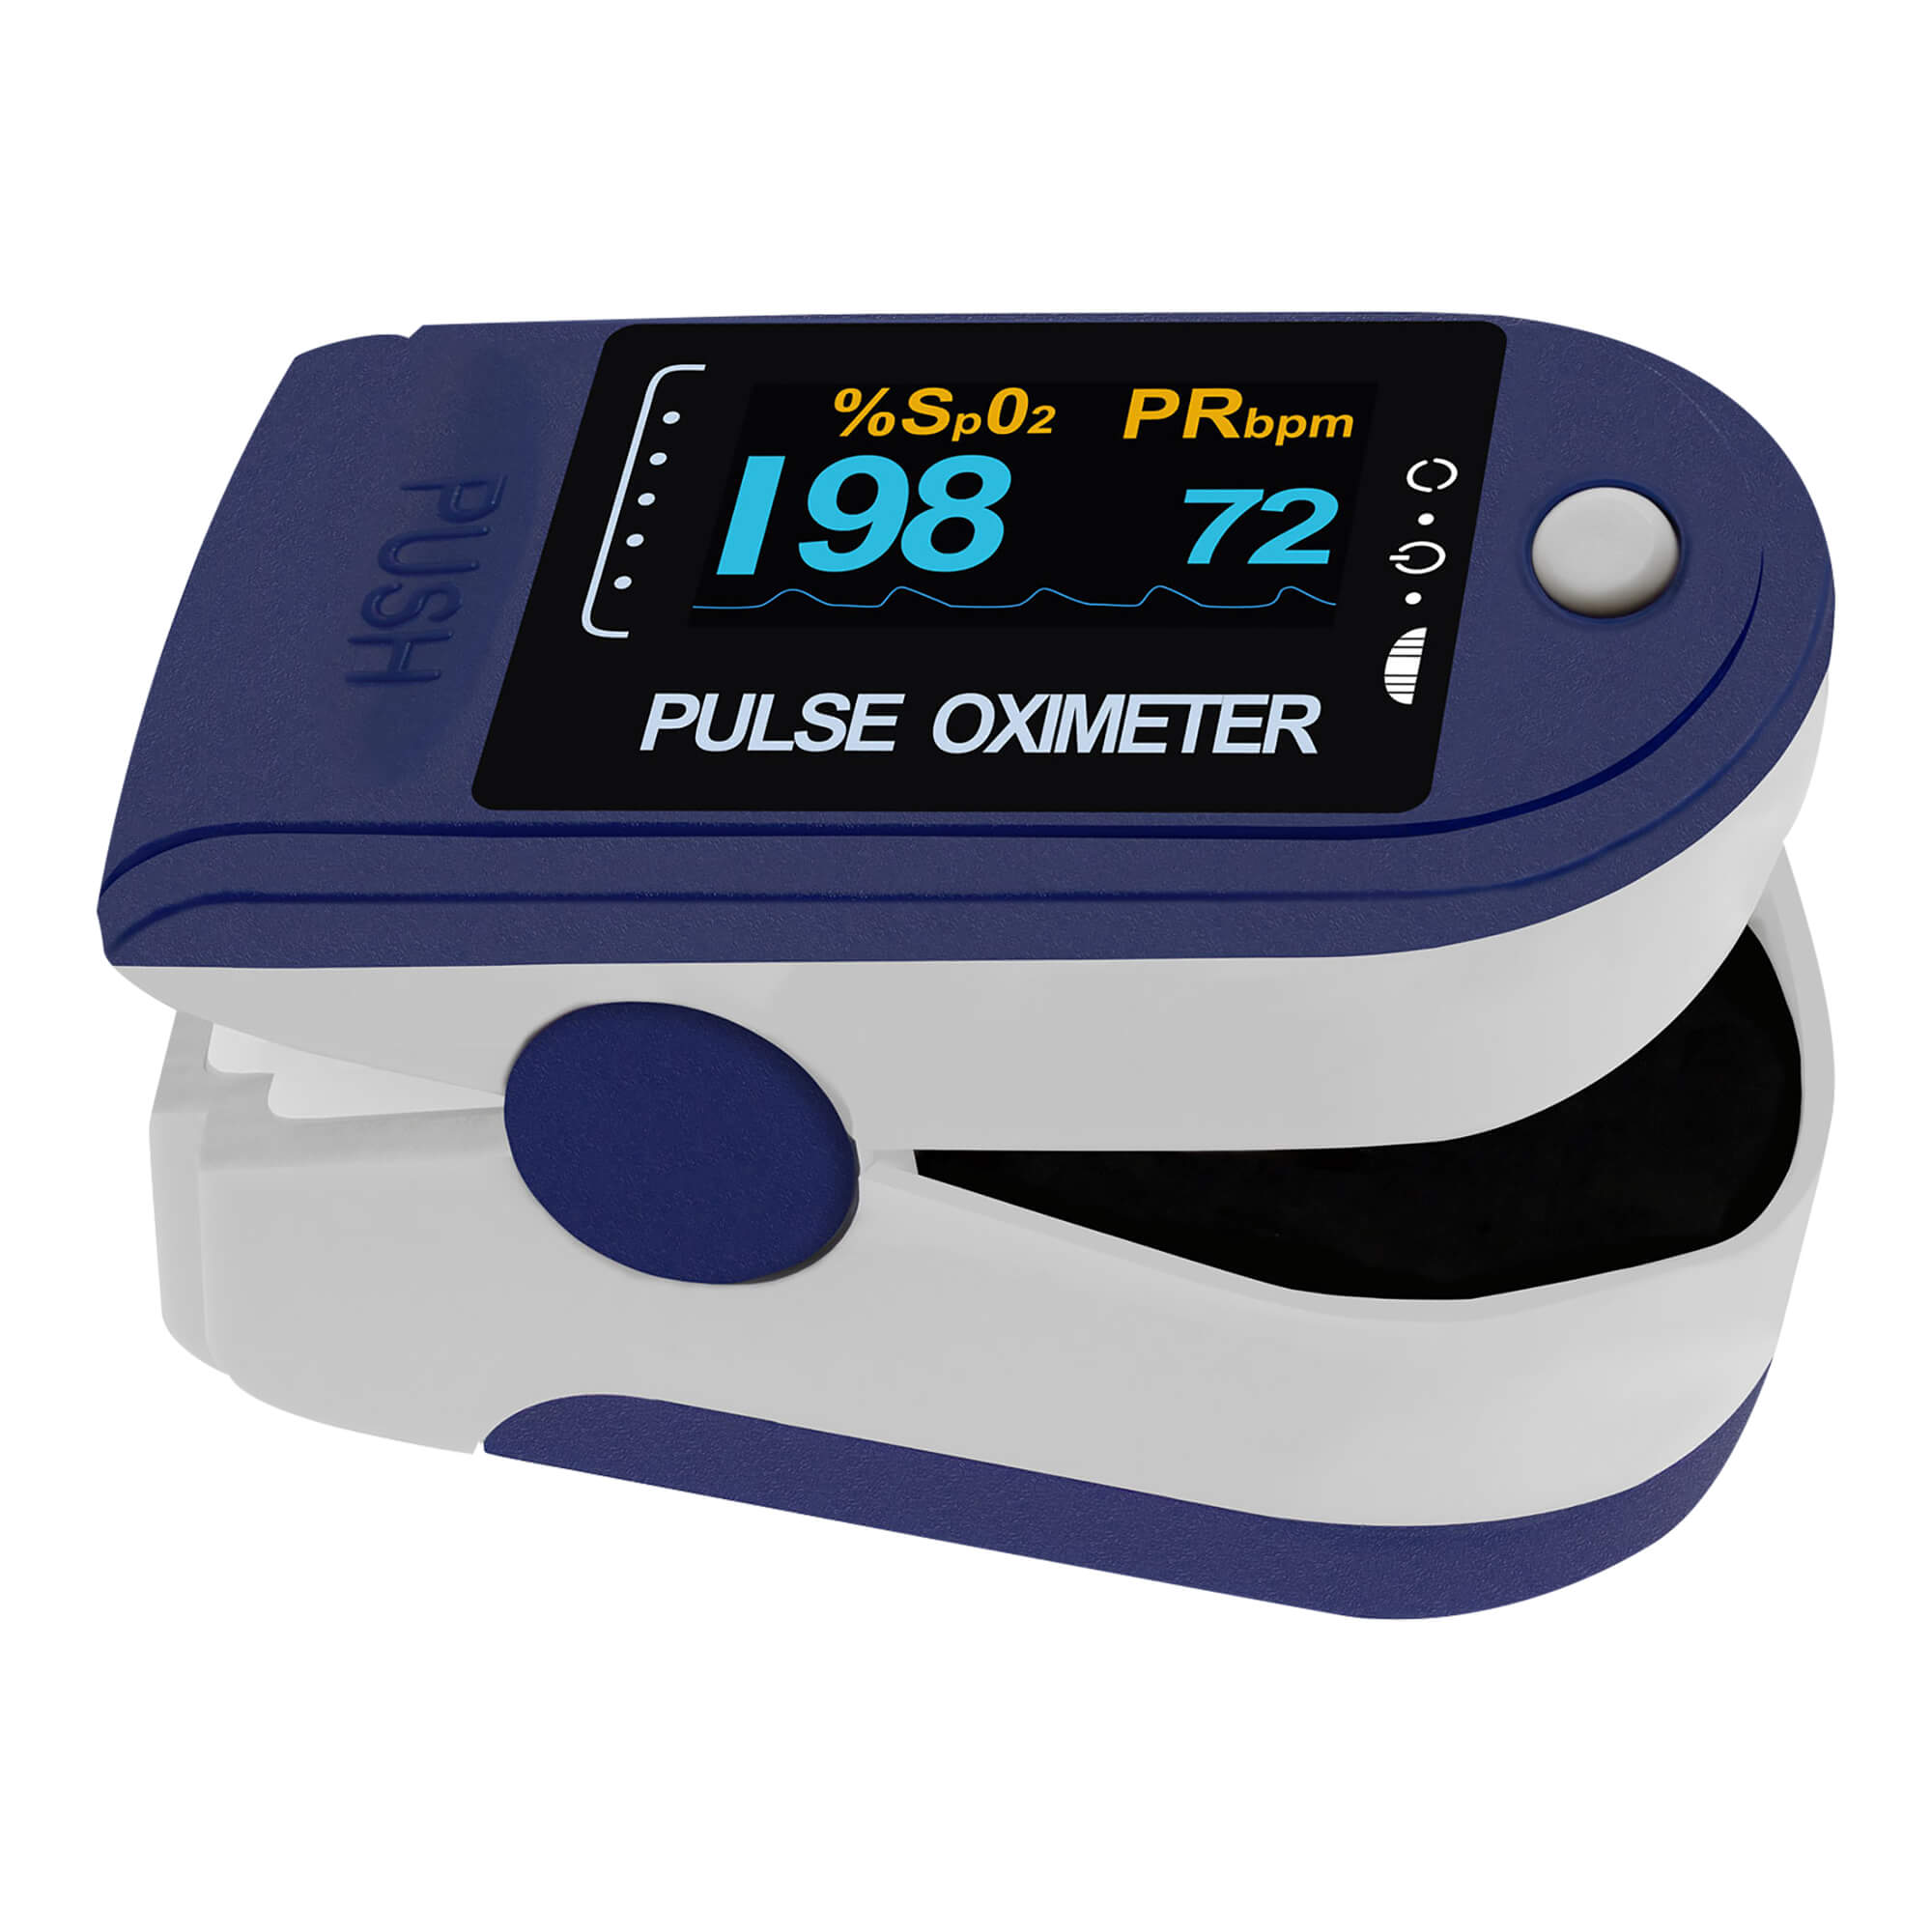 Finger-Puls-Oximeter mit OLED-Anzeige. Farbe: blau.